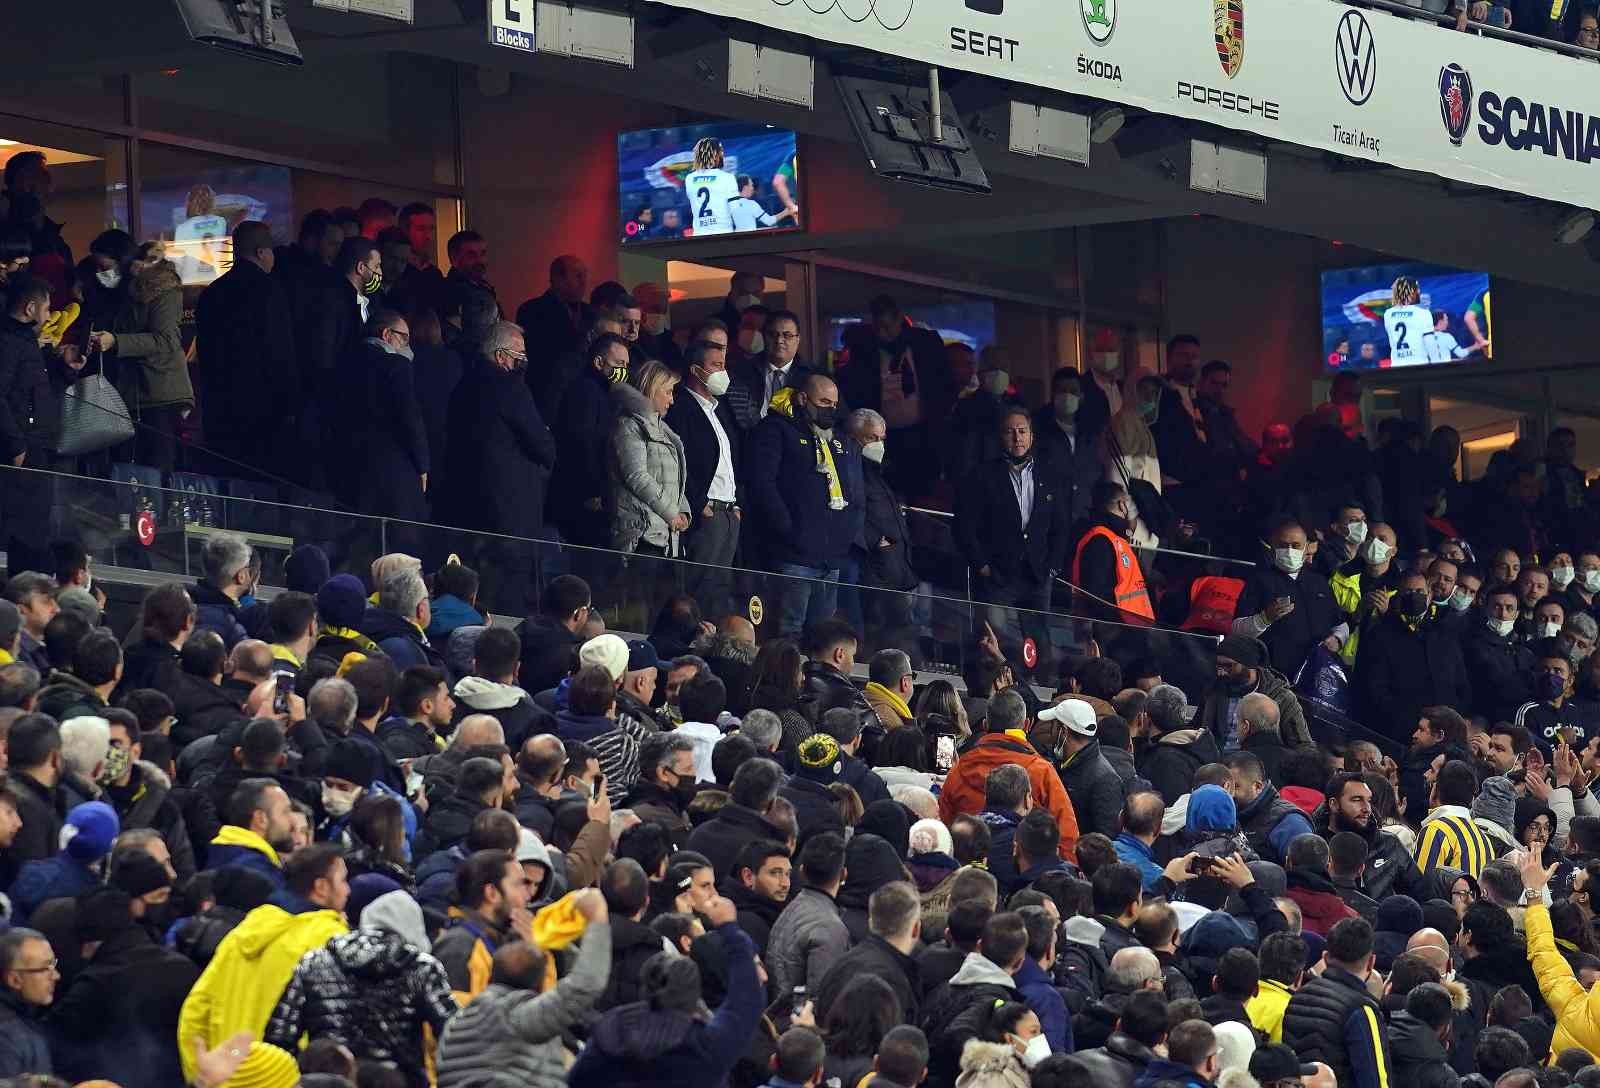 Fenerbahçe taraftarlardan istifa çağrısı #istanbul